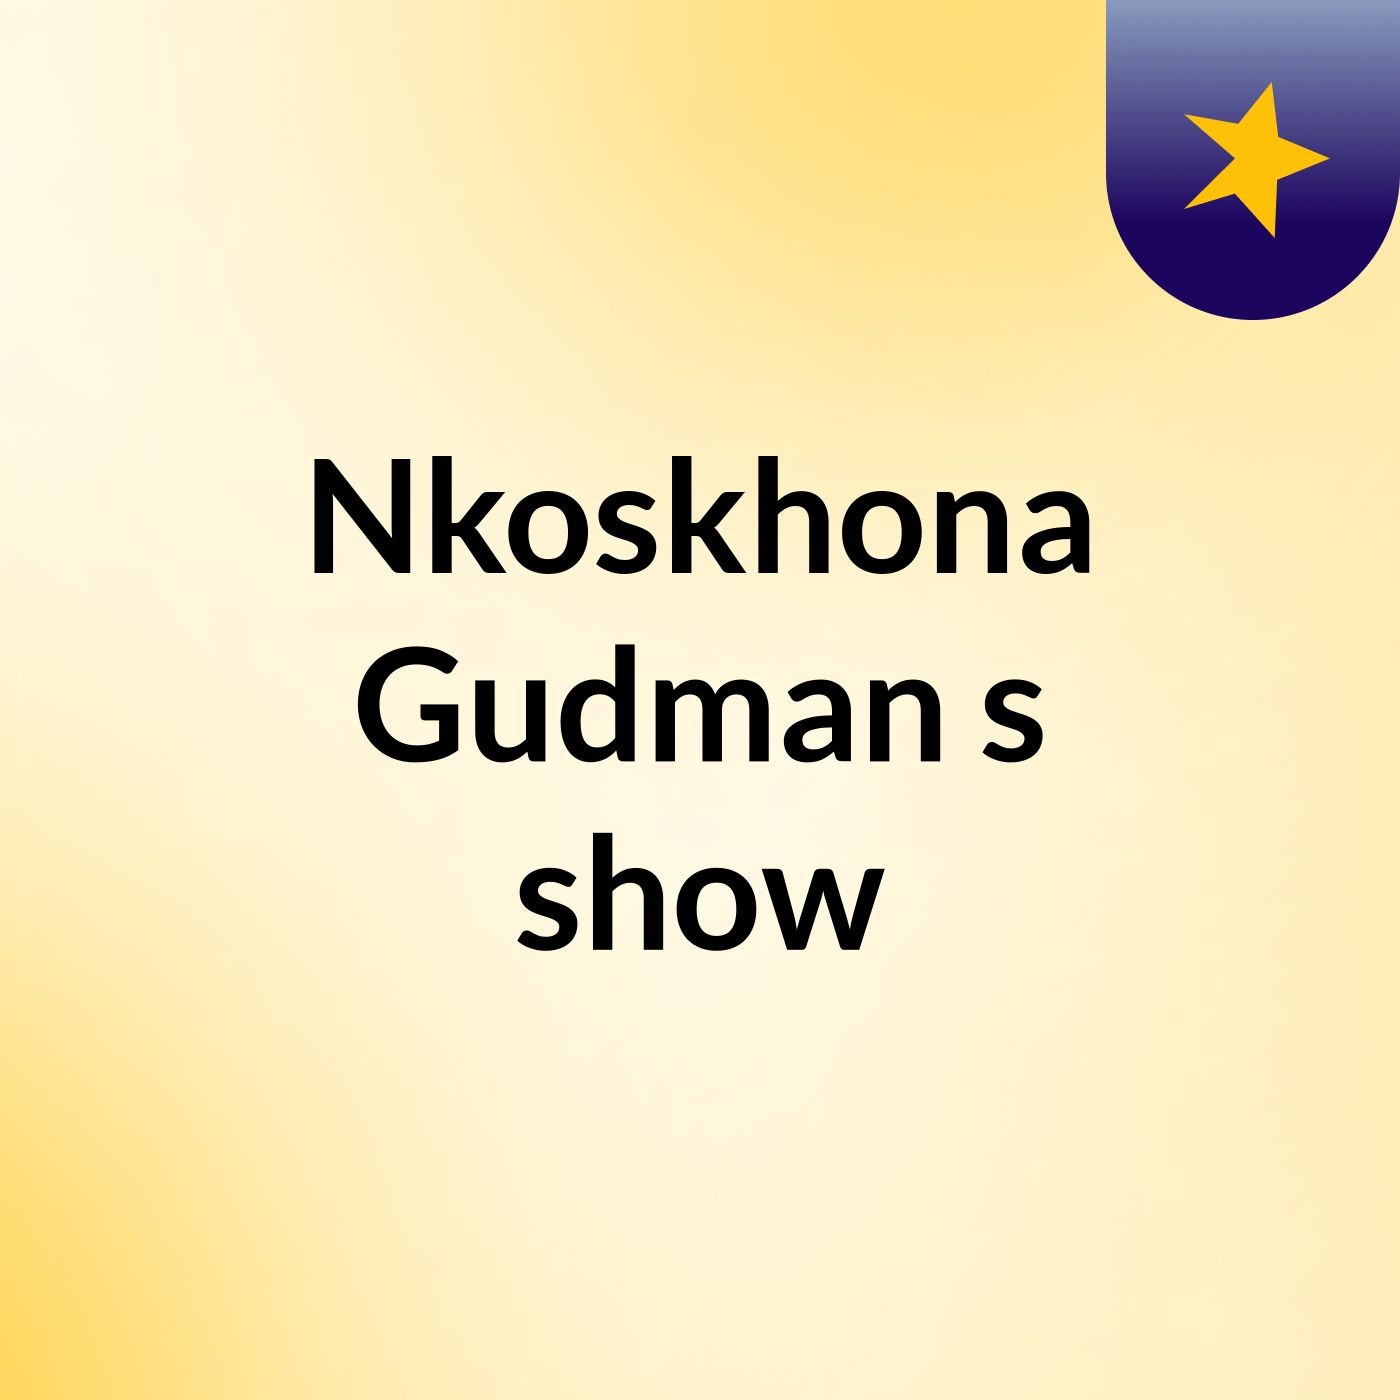 Episode 15 - Nkoskhona Gudman's show